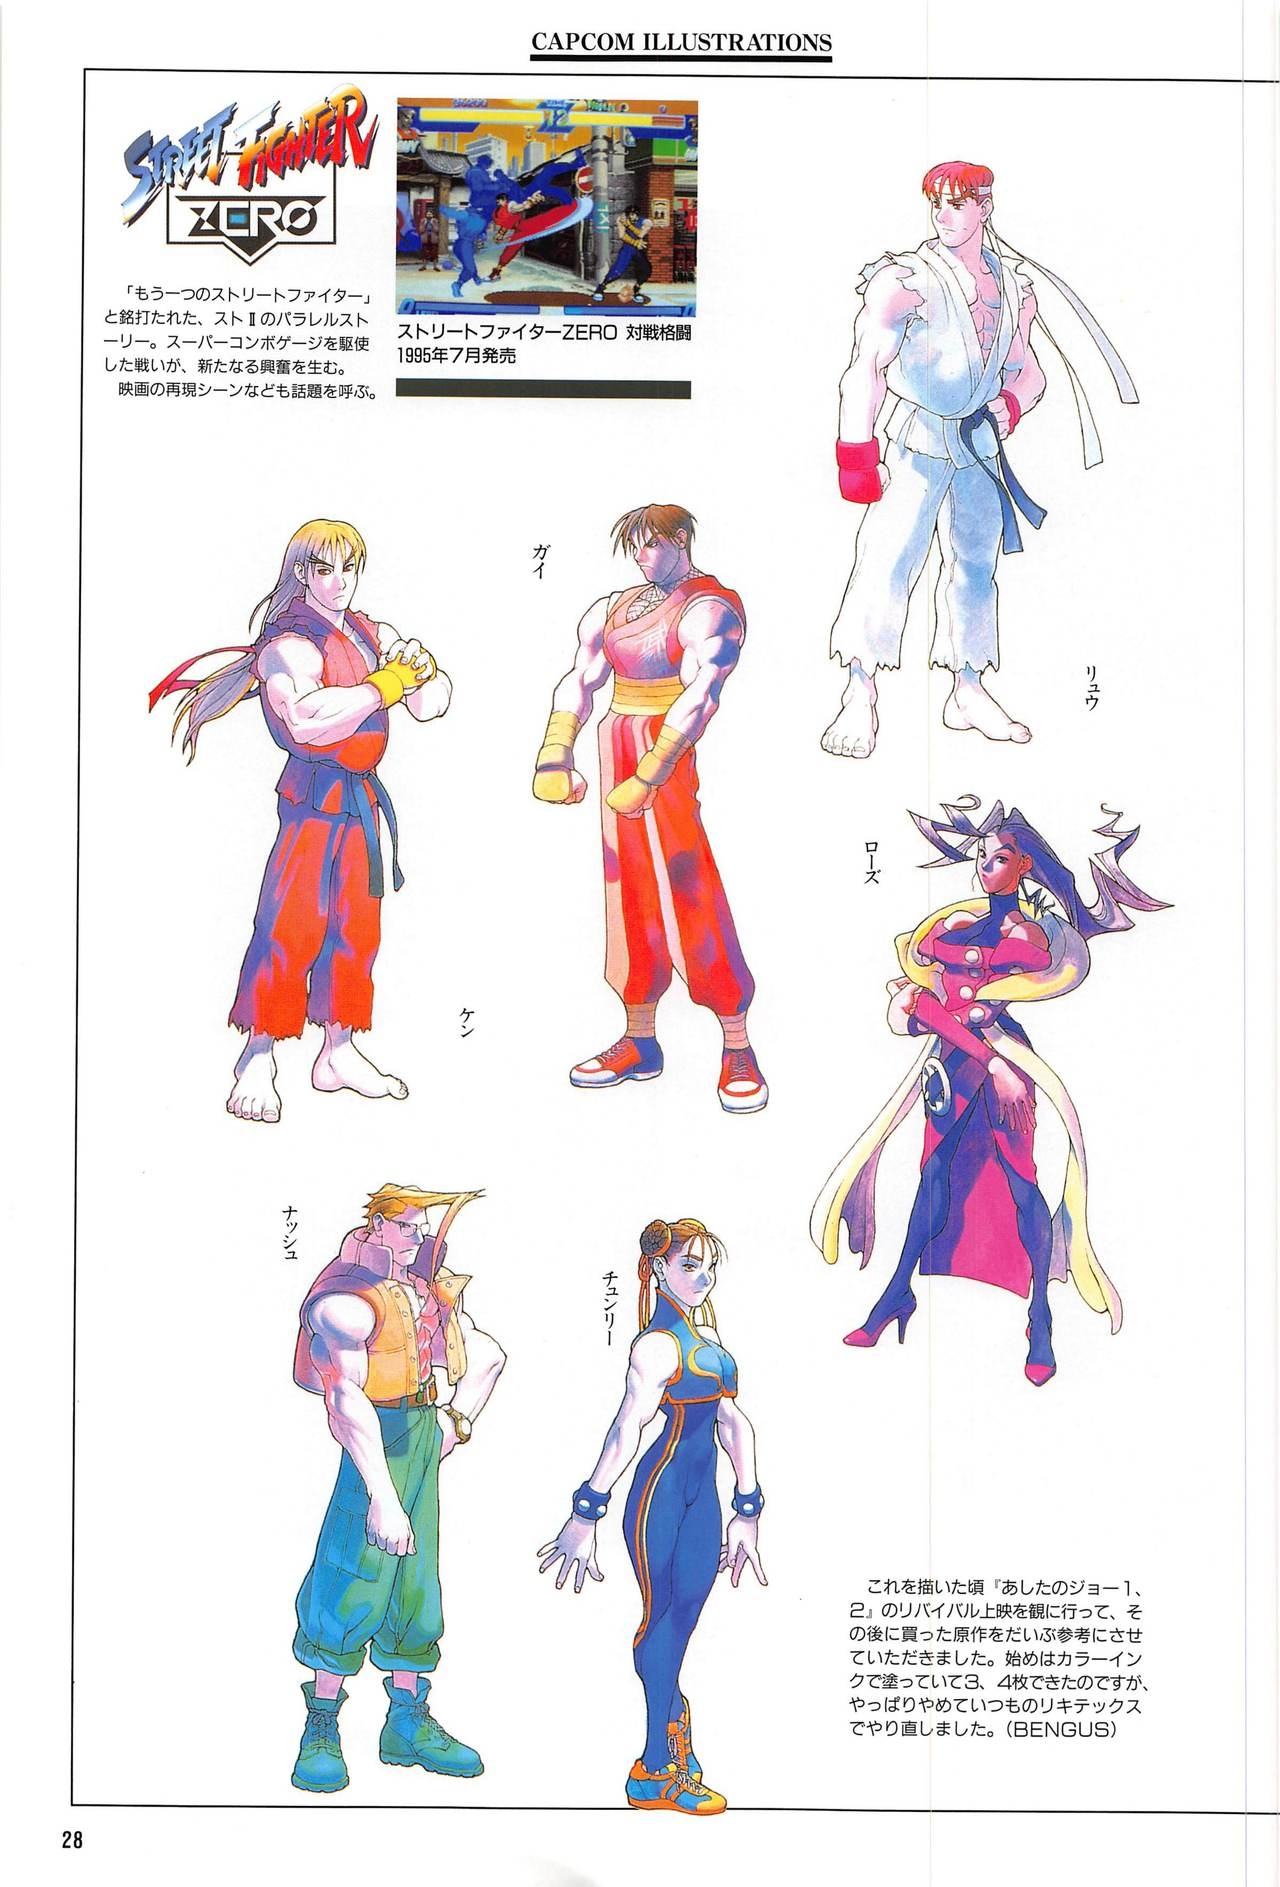 Capcom Illustrations - Gamest Mook 17  [High Quality] 31